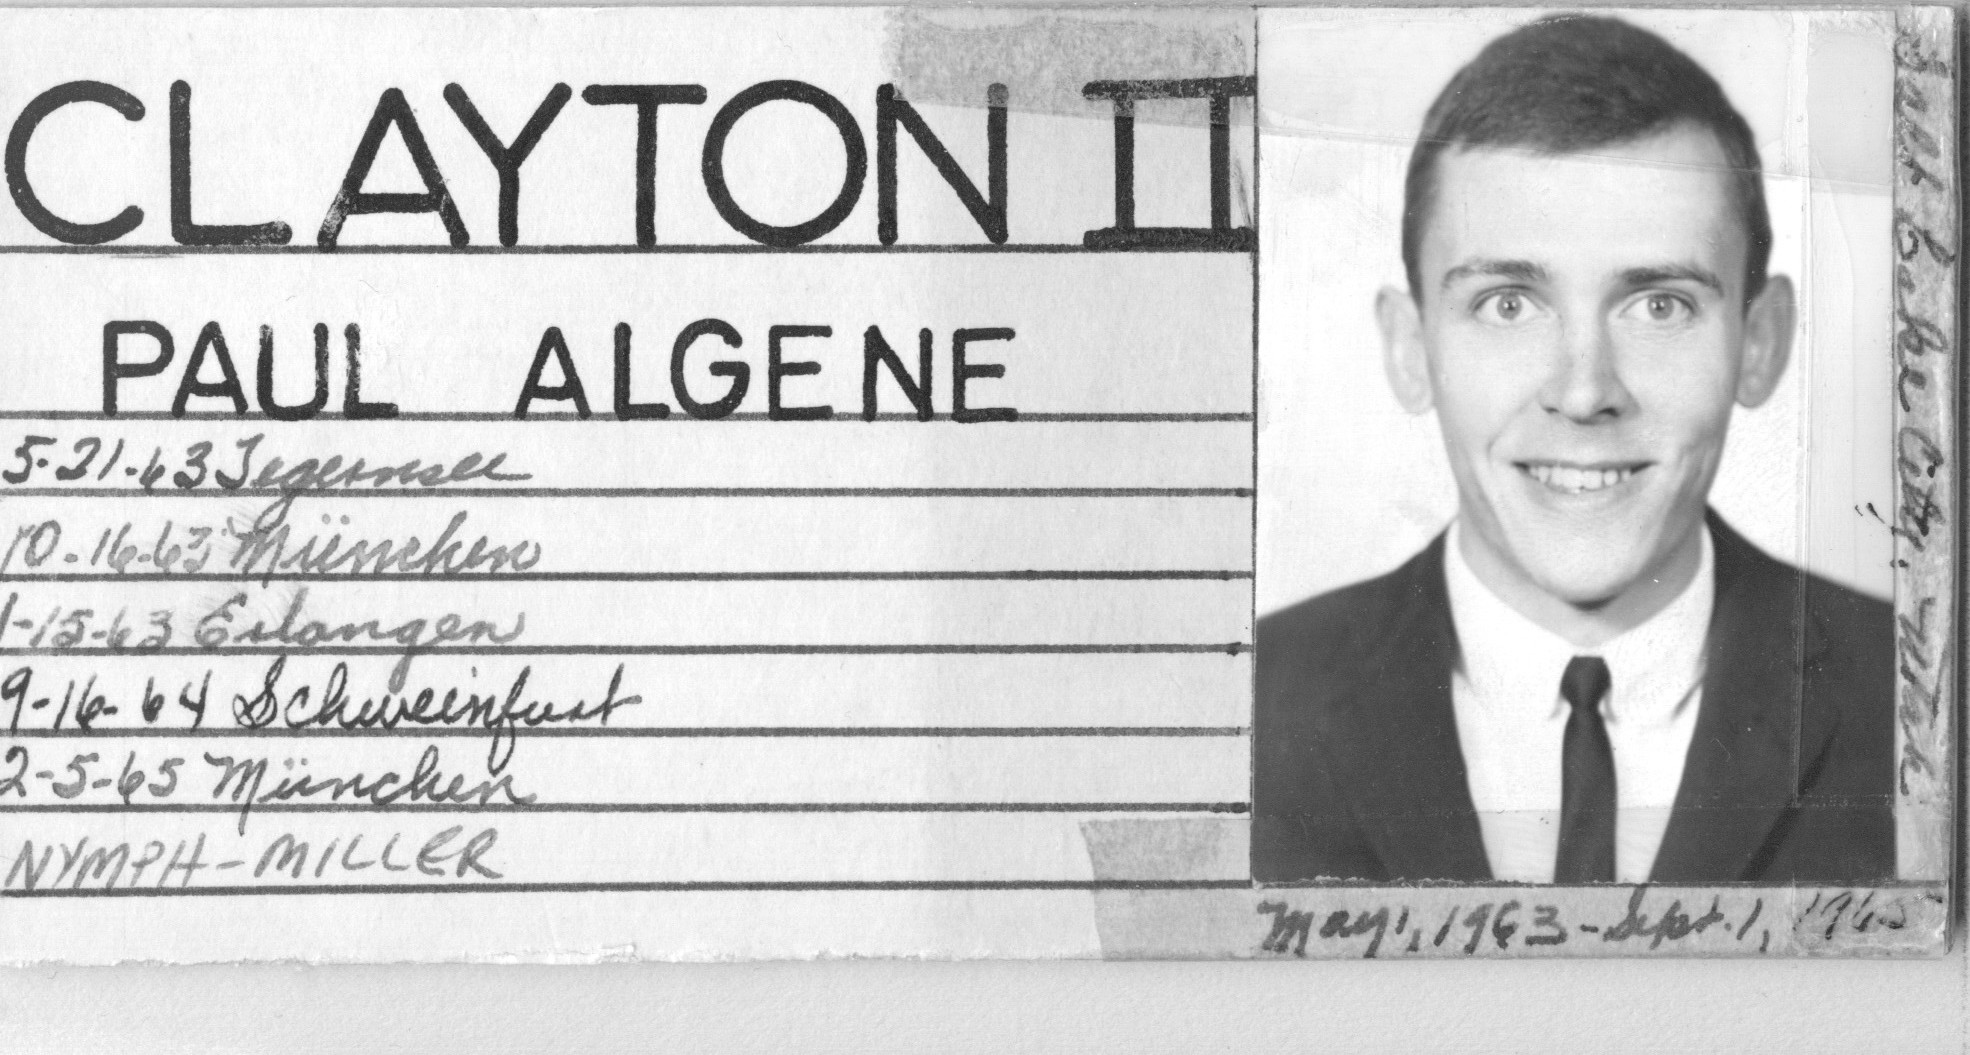 Clayton II, Paul Algene